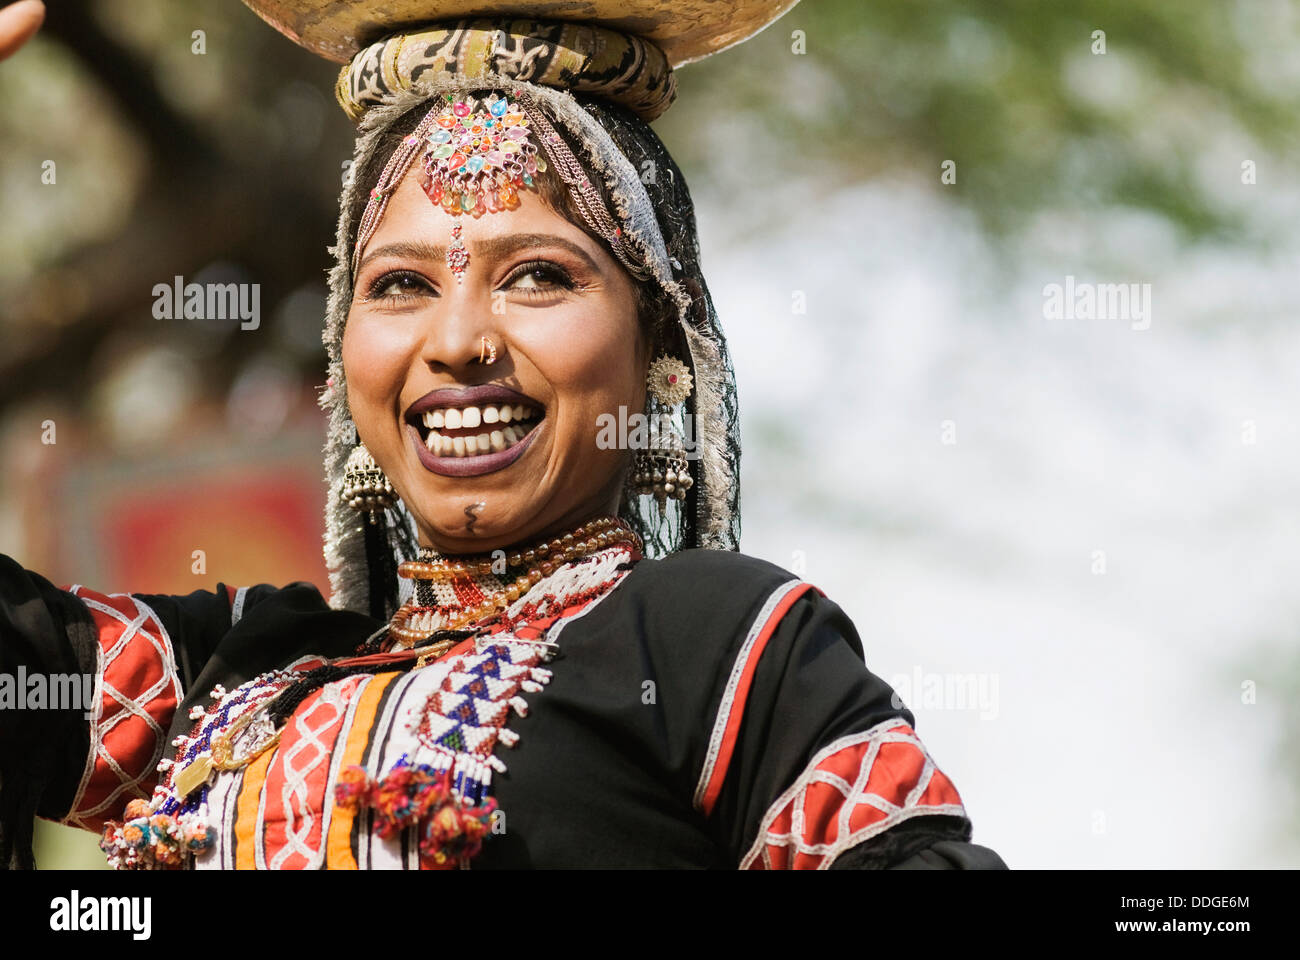 Woman In Traditional Rajasthani Dress Performing Kalbelia Dance In Surajkund Mela Faridabad